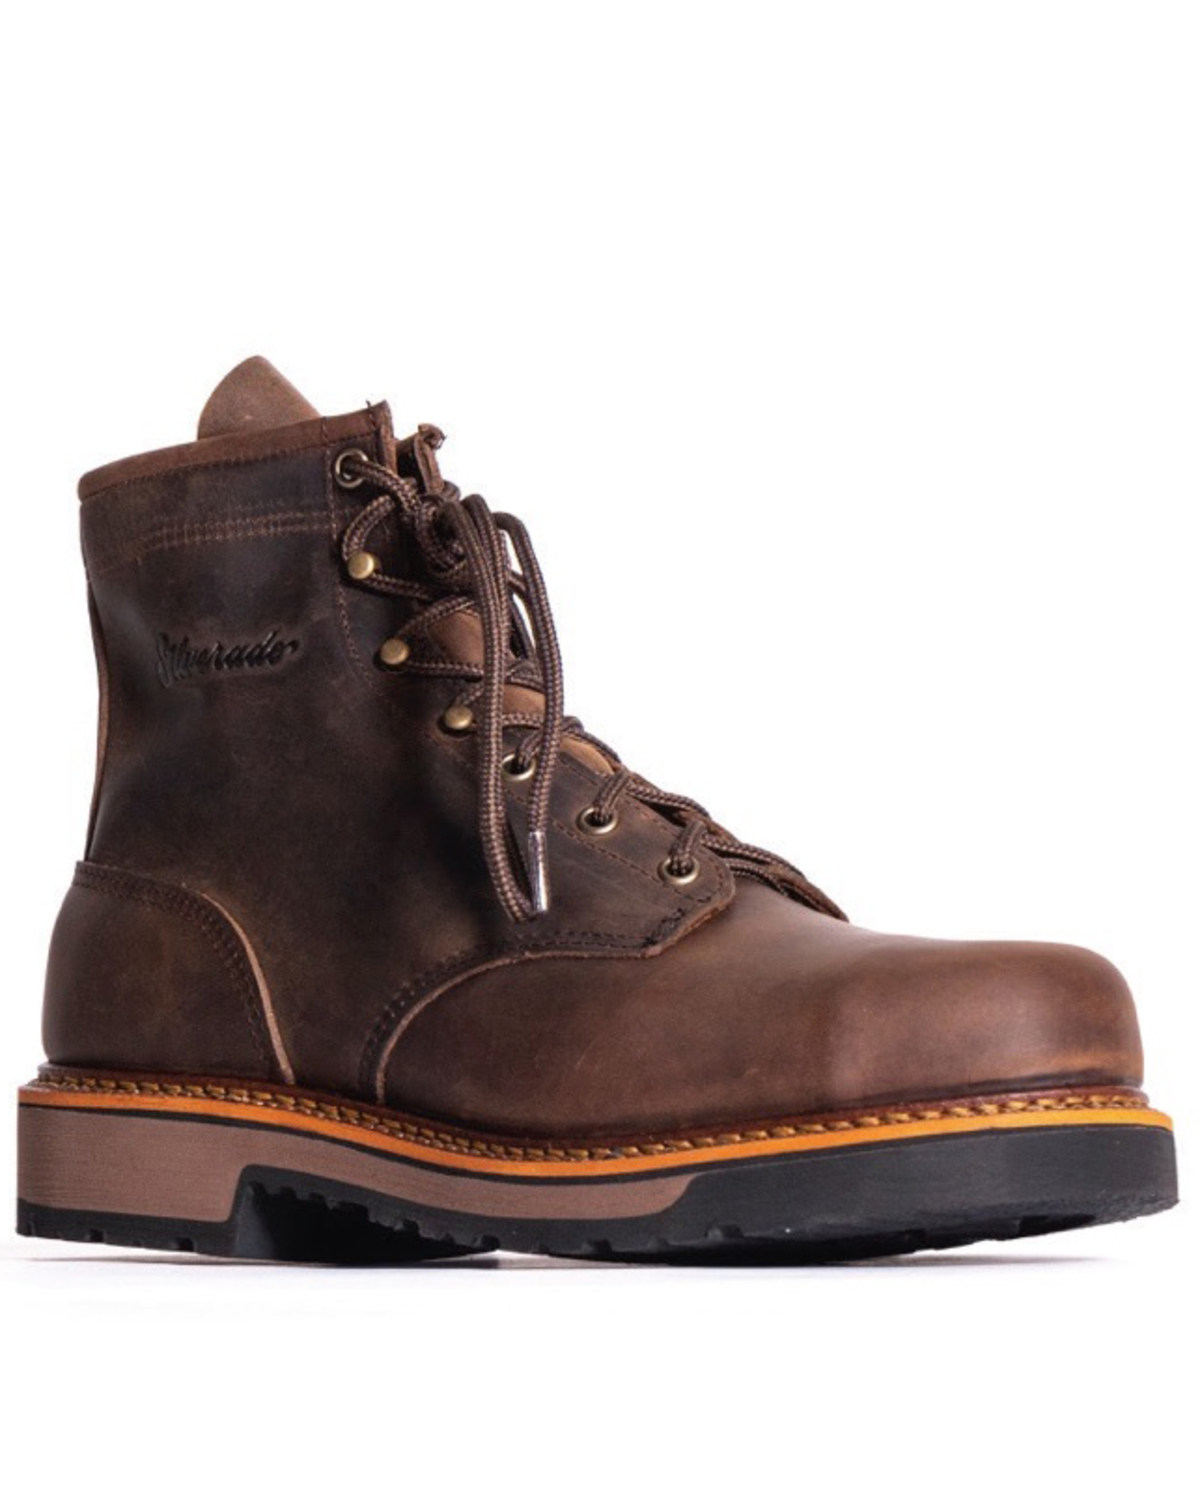 Silverado Men's Brown 6" Work Boots - Soft Toe